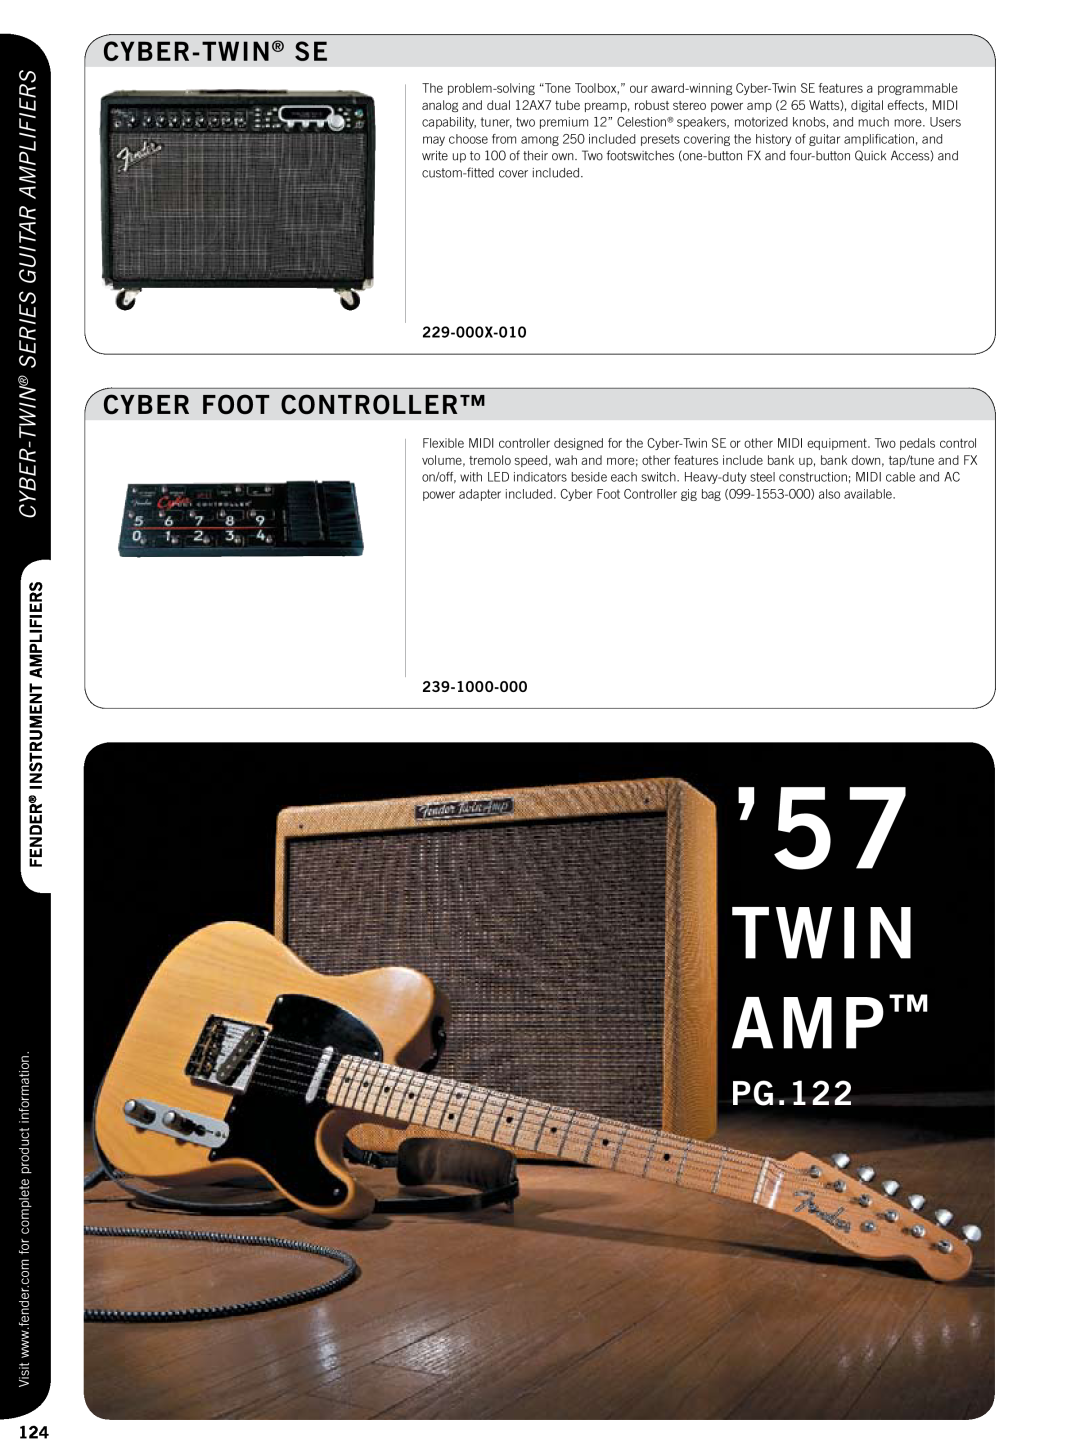 Fender 815-060X-000, 815-050X-000 manual PG.122, Cyber-Twin Se, Cyber Foot Controller, 229-000X-010, 239-1000-000, Twin Amp 